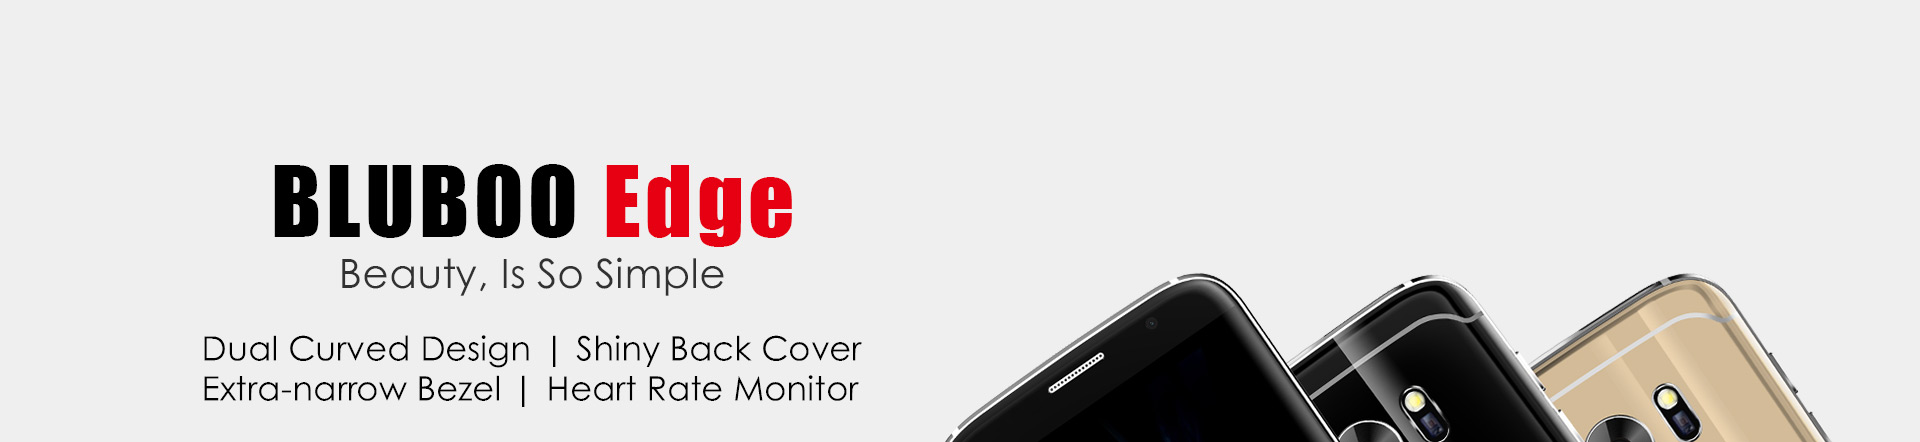 BLUBOO Edge 5.5-inch Dual Curvy 2GB RAM 16GB ROM MTK6737 Quad-core 4G Smartphone